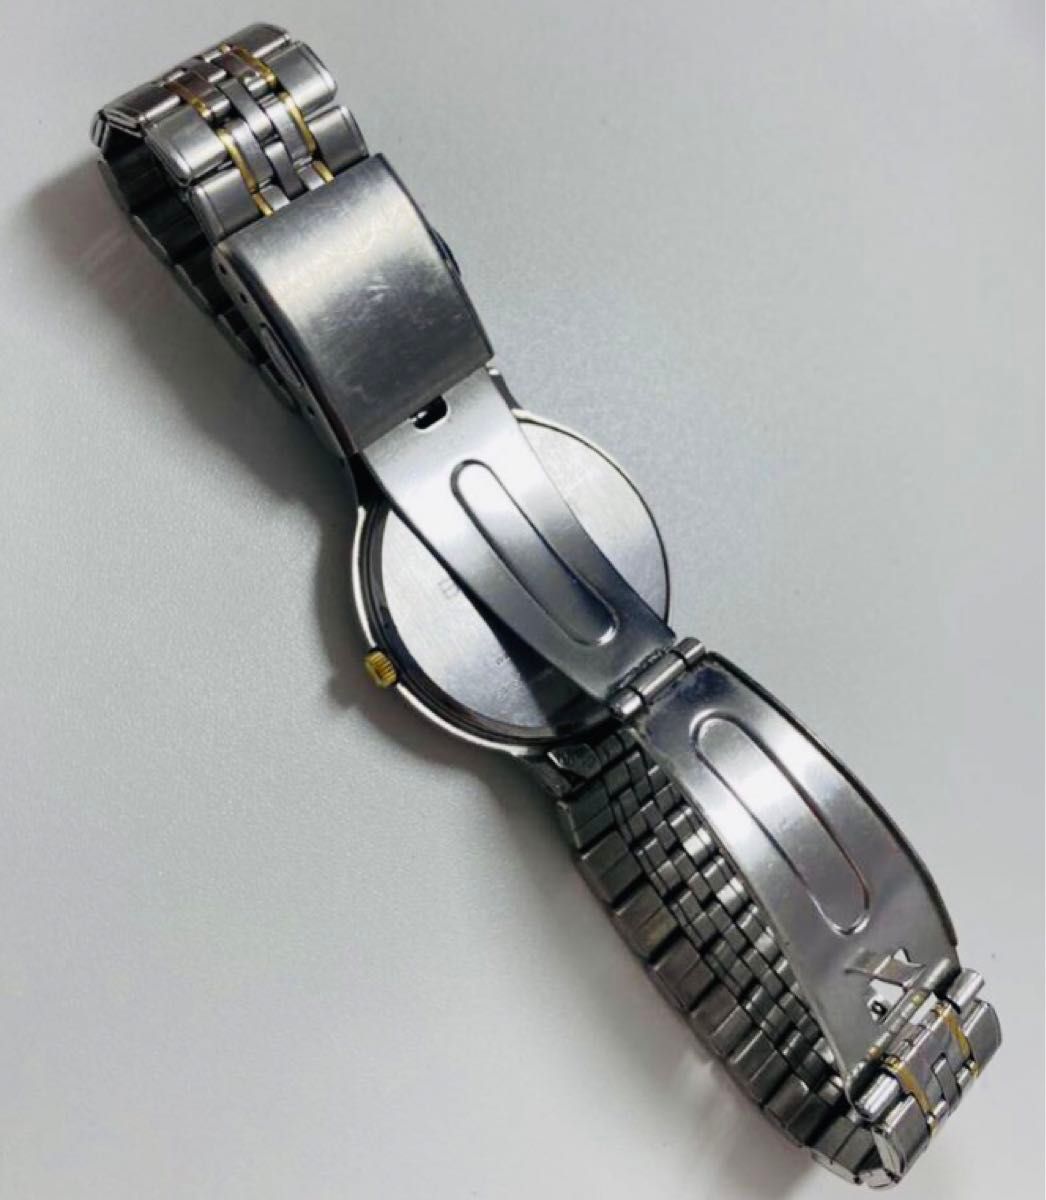 【SEIKO SPIRIT】セイコースピリット　メンズ腕時計　クオーツデイト　7N22ー6A80 可動品　電池交換済殺菌除菌済み